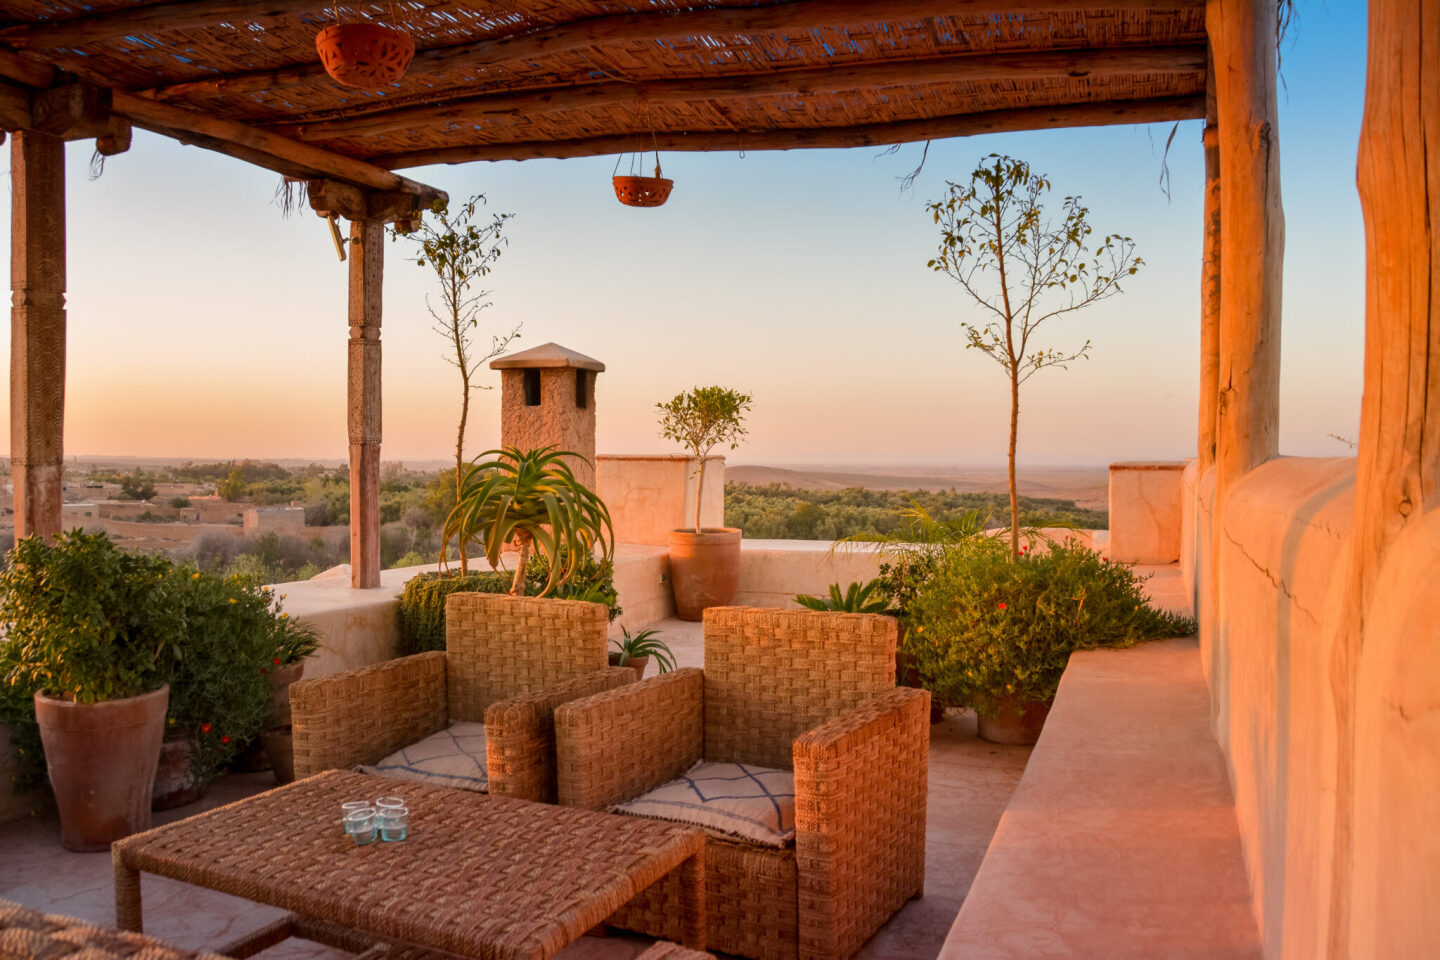 Tagadert Lodge, maison d'hôtes Marrakech, Morocco